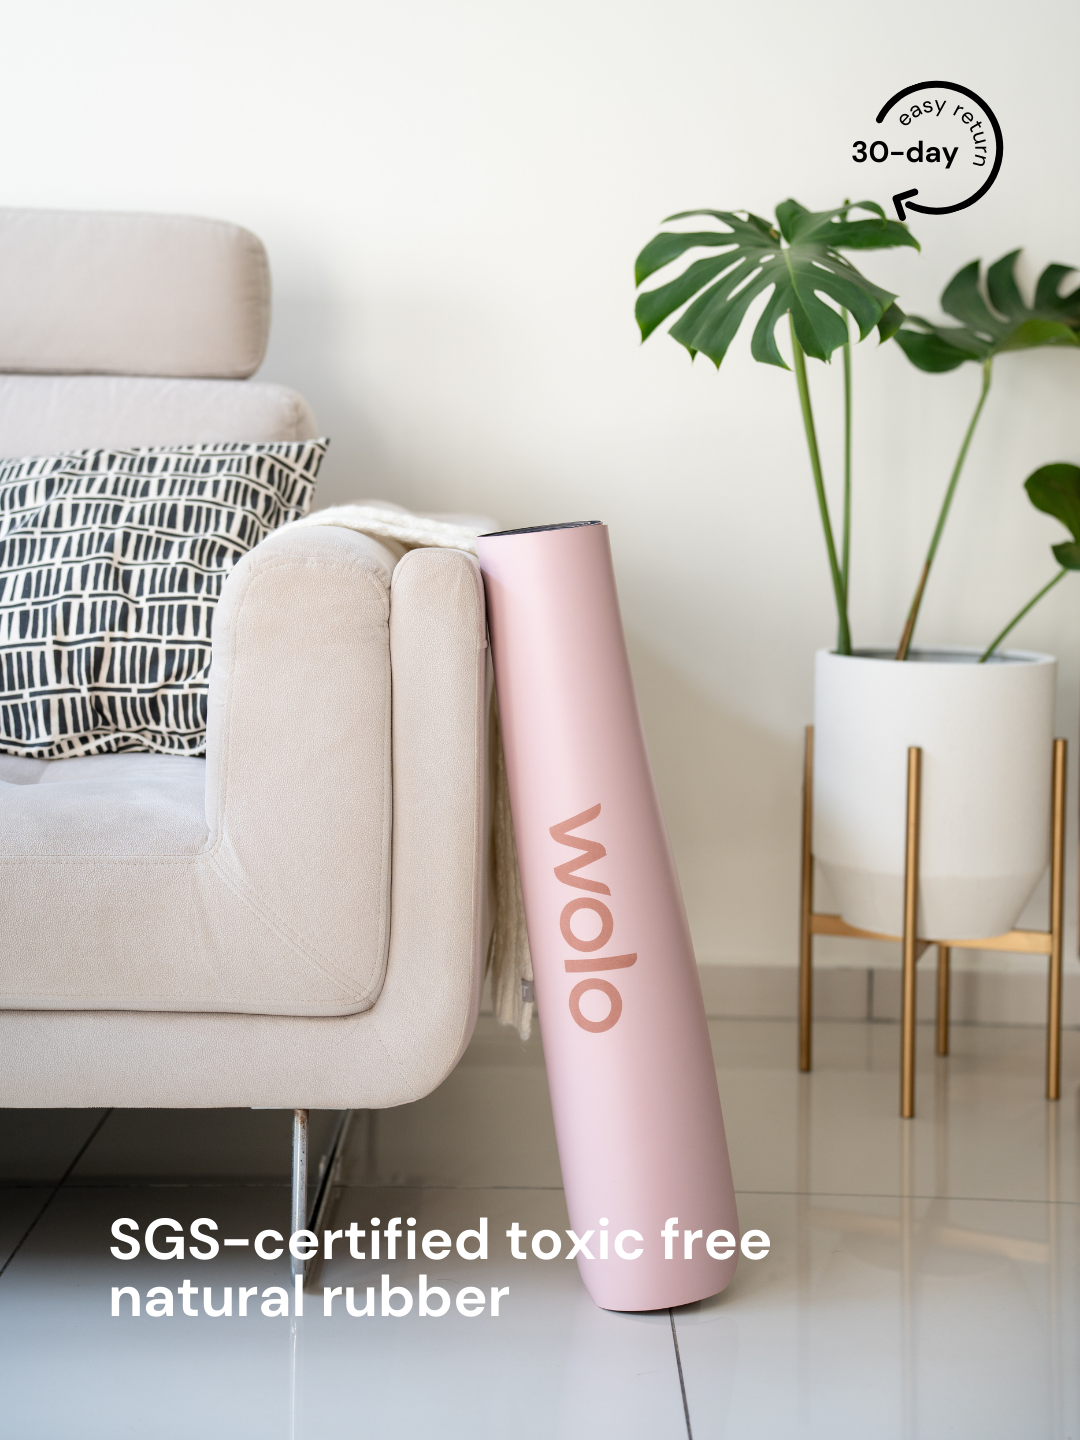 A sakura pink yoga mat made with SGS-certified natural rubber